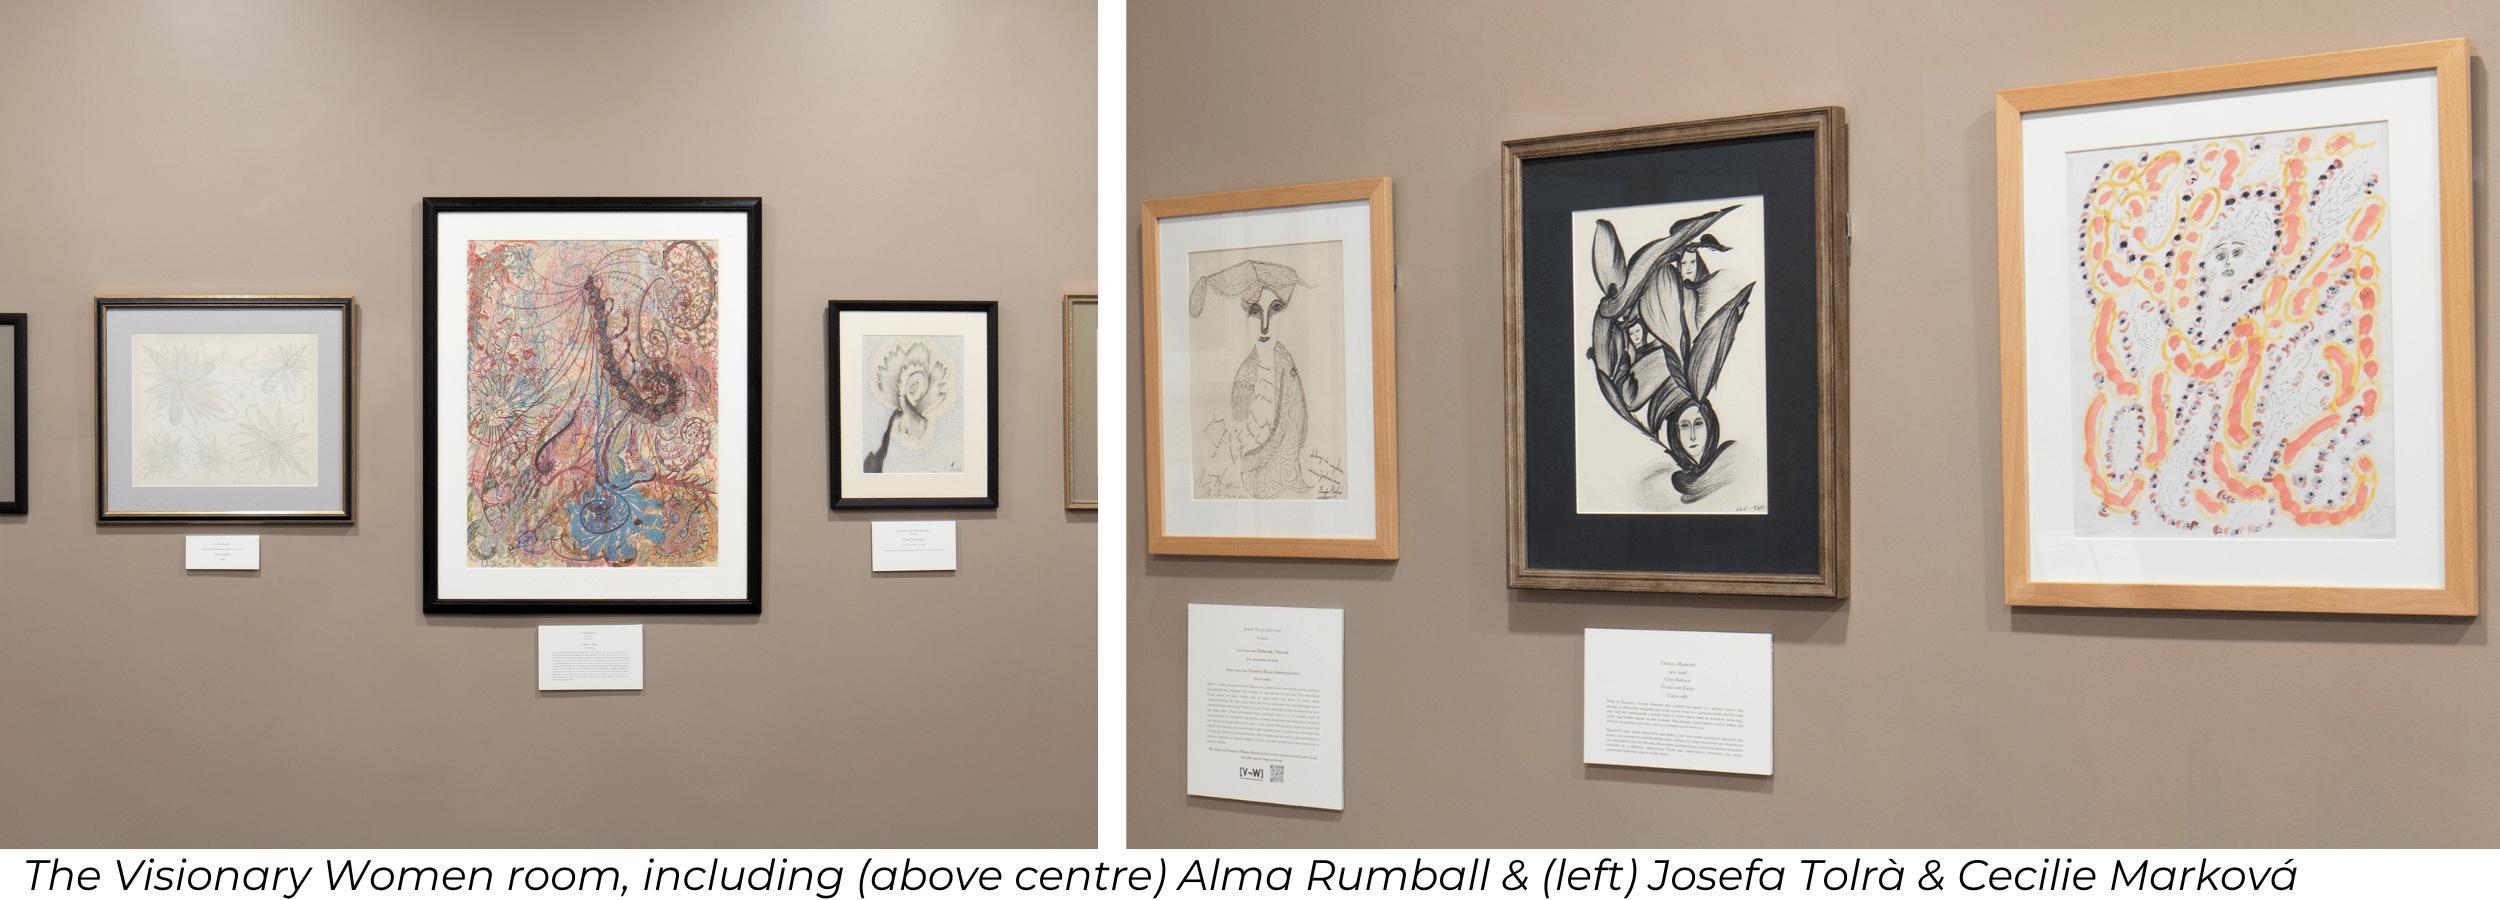 Artworks by Alma Rumball, Josefa Tolra and Cecilie Markova